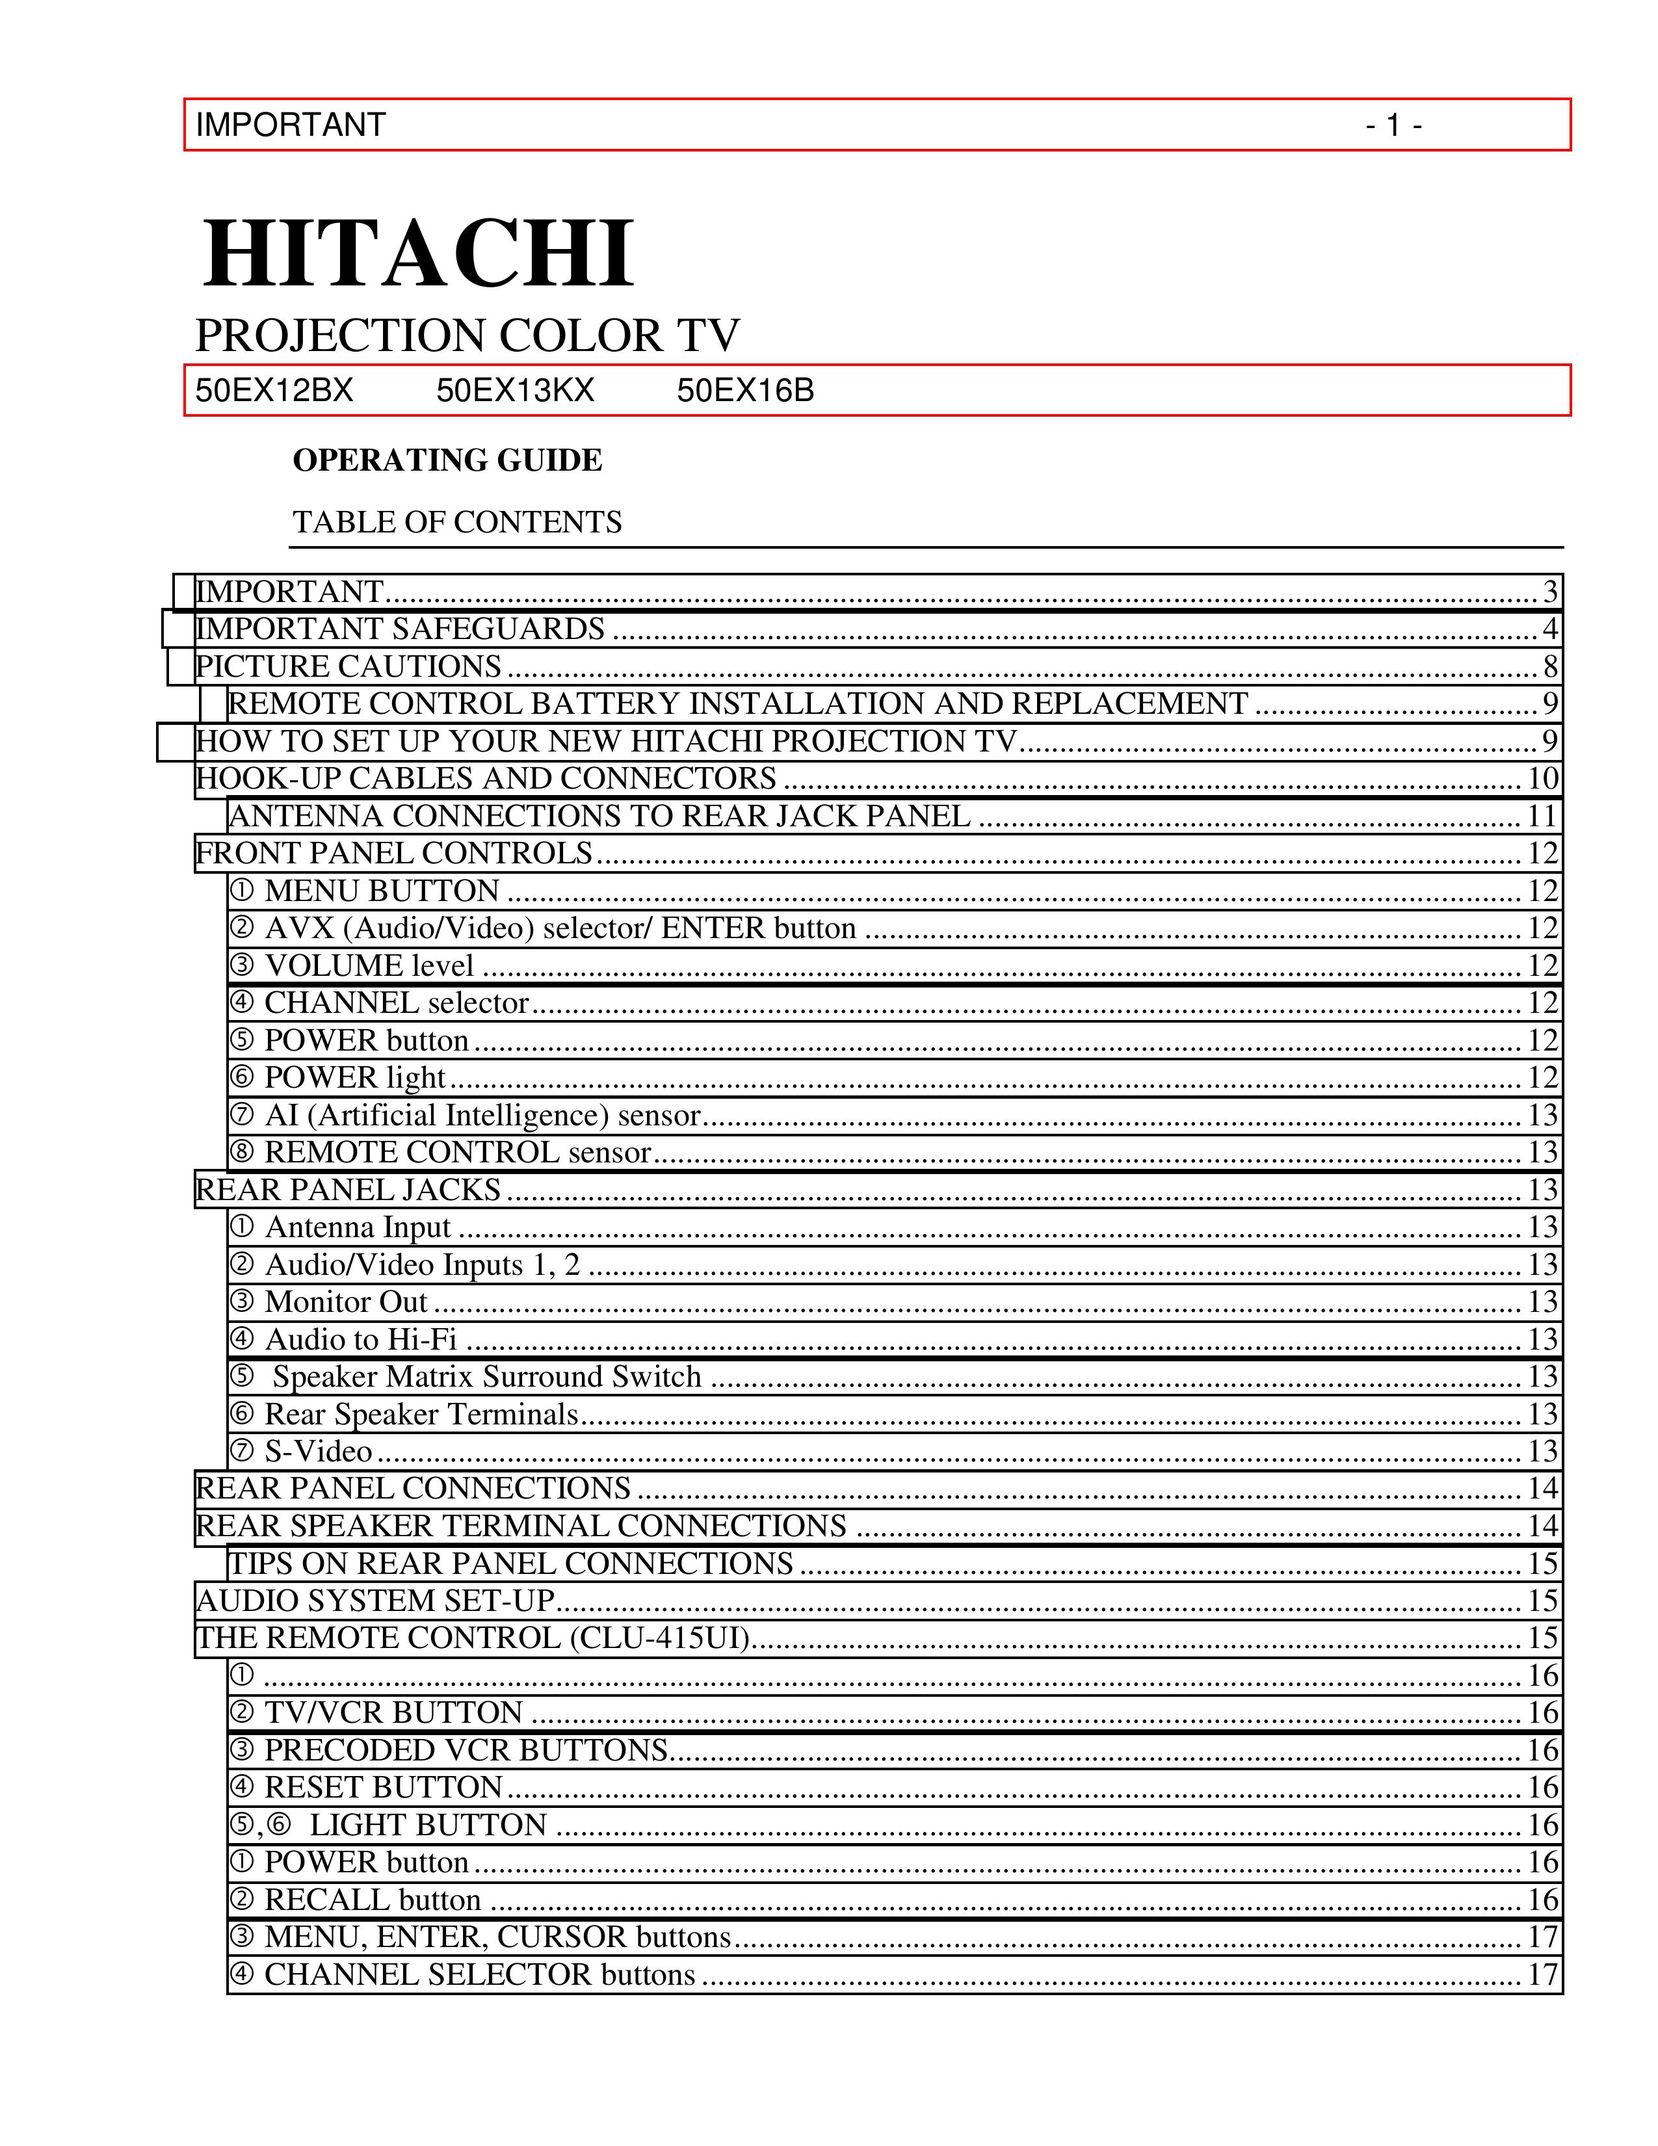 Hitachi 50EX16B Projection Television User Manual